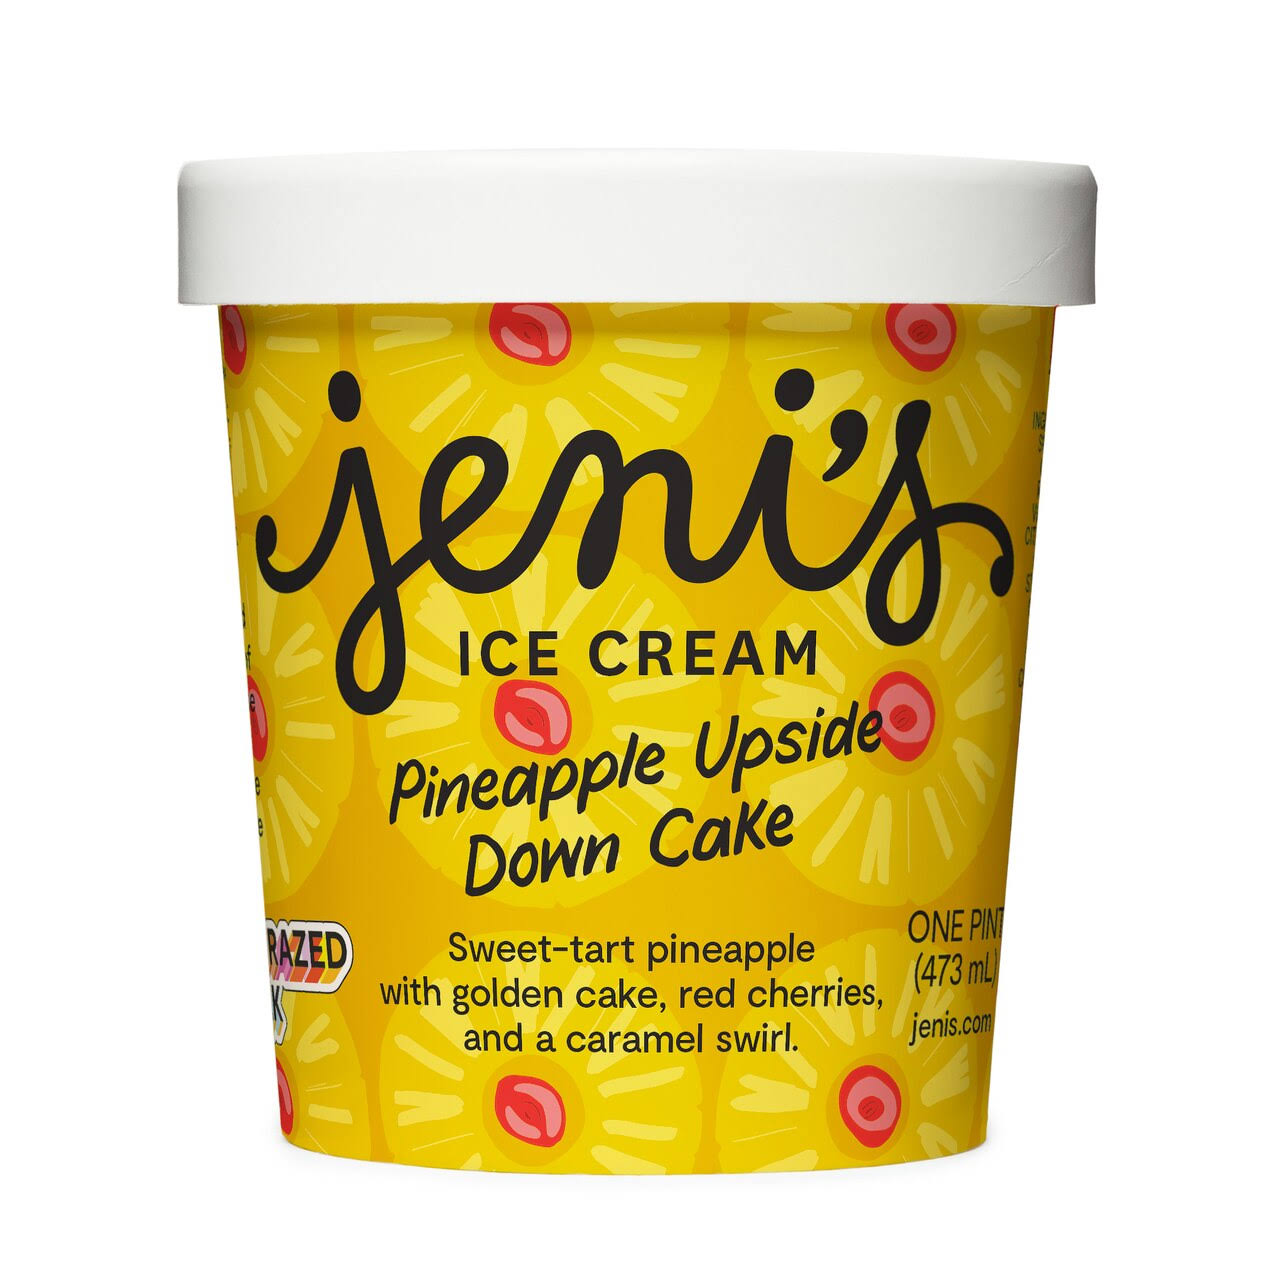 Jeni's Ice Cream, Pineapple Upside Down Cake - one pint (473 ml)